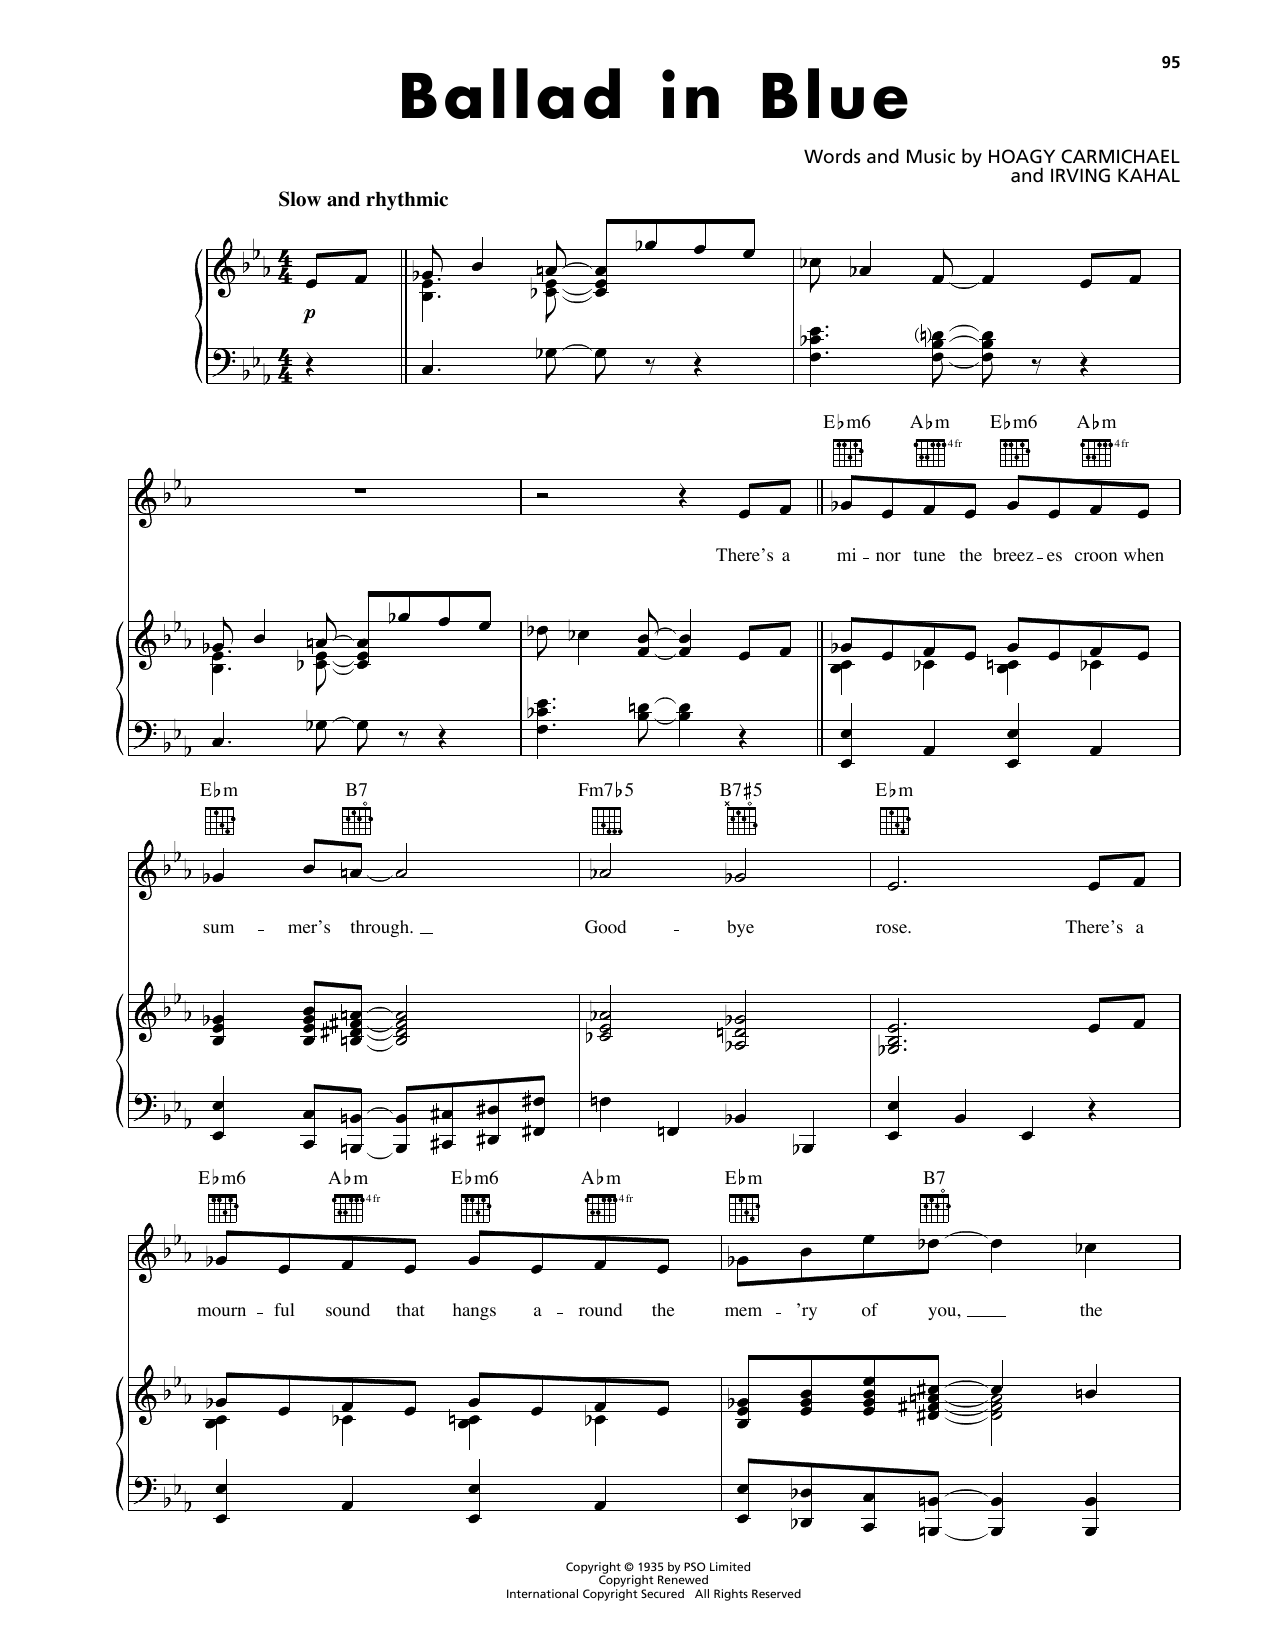 Download Hoagy Carmichael Ballad In Blue Sheet Music